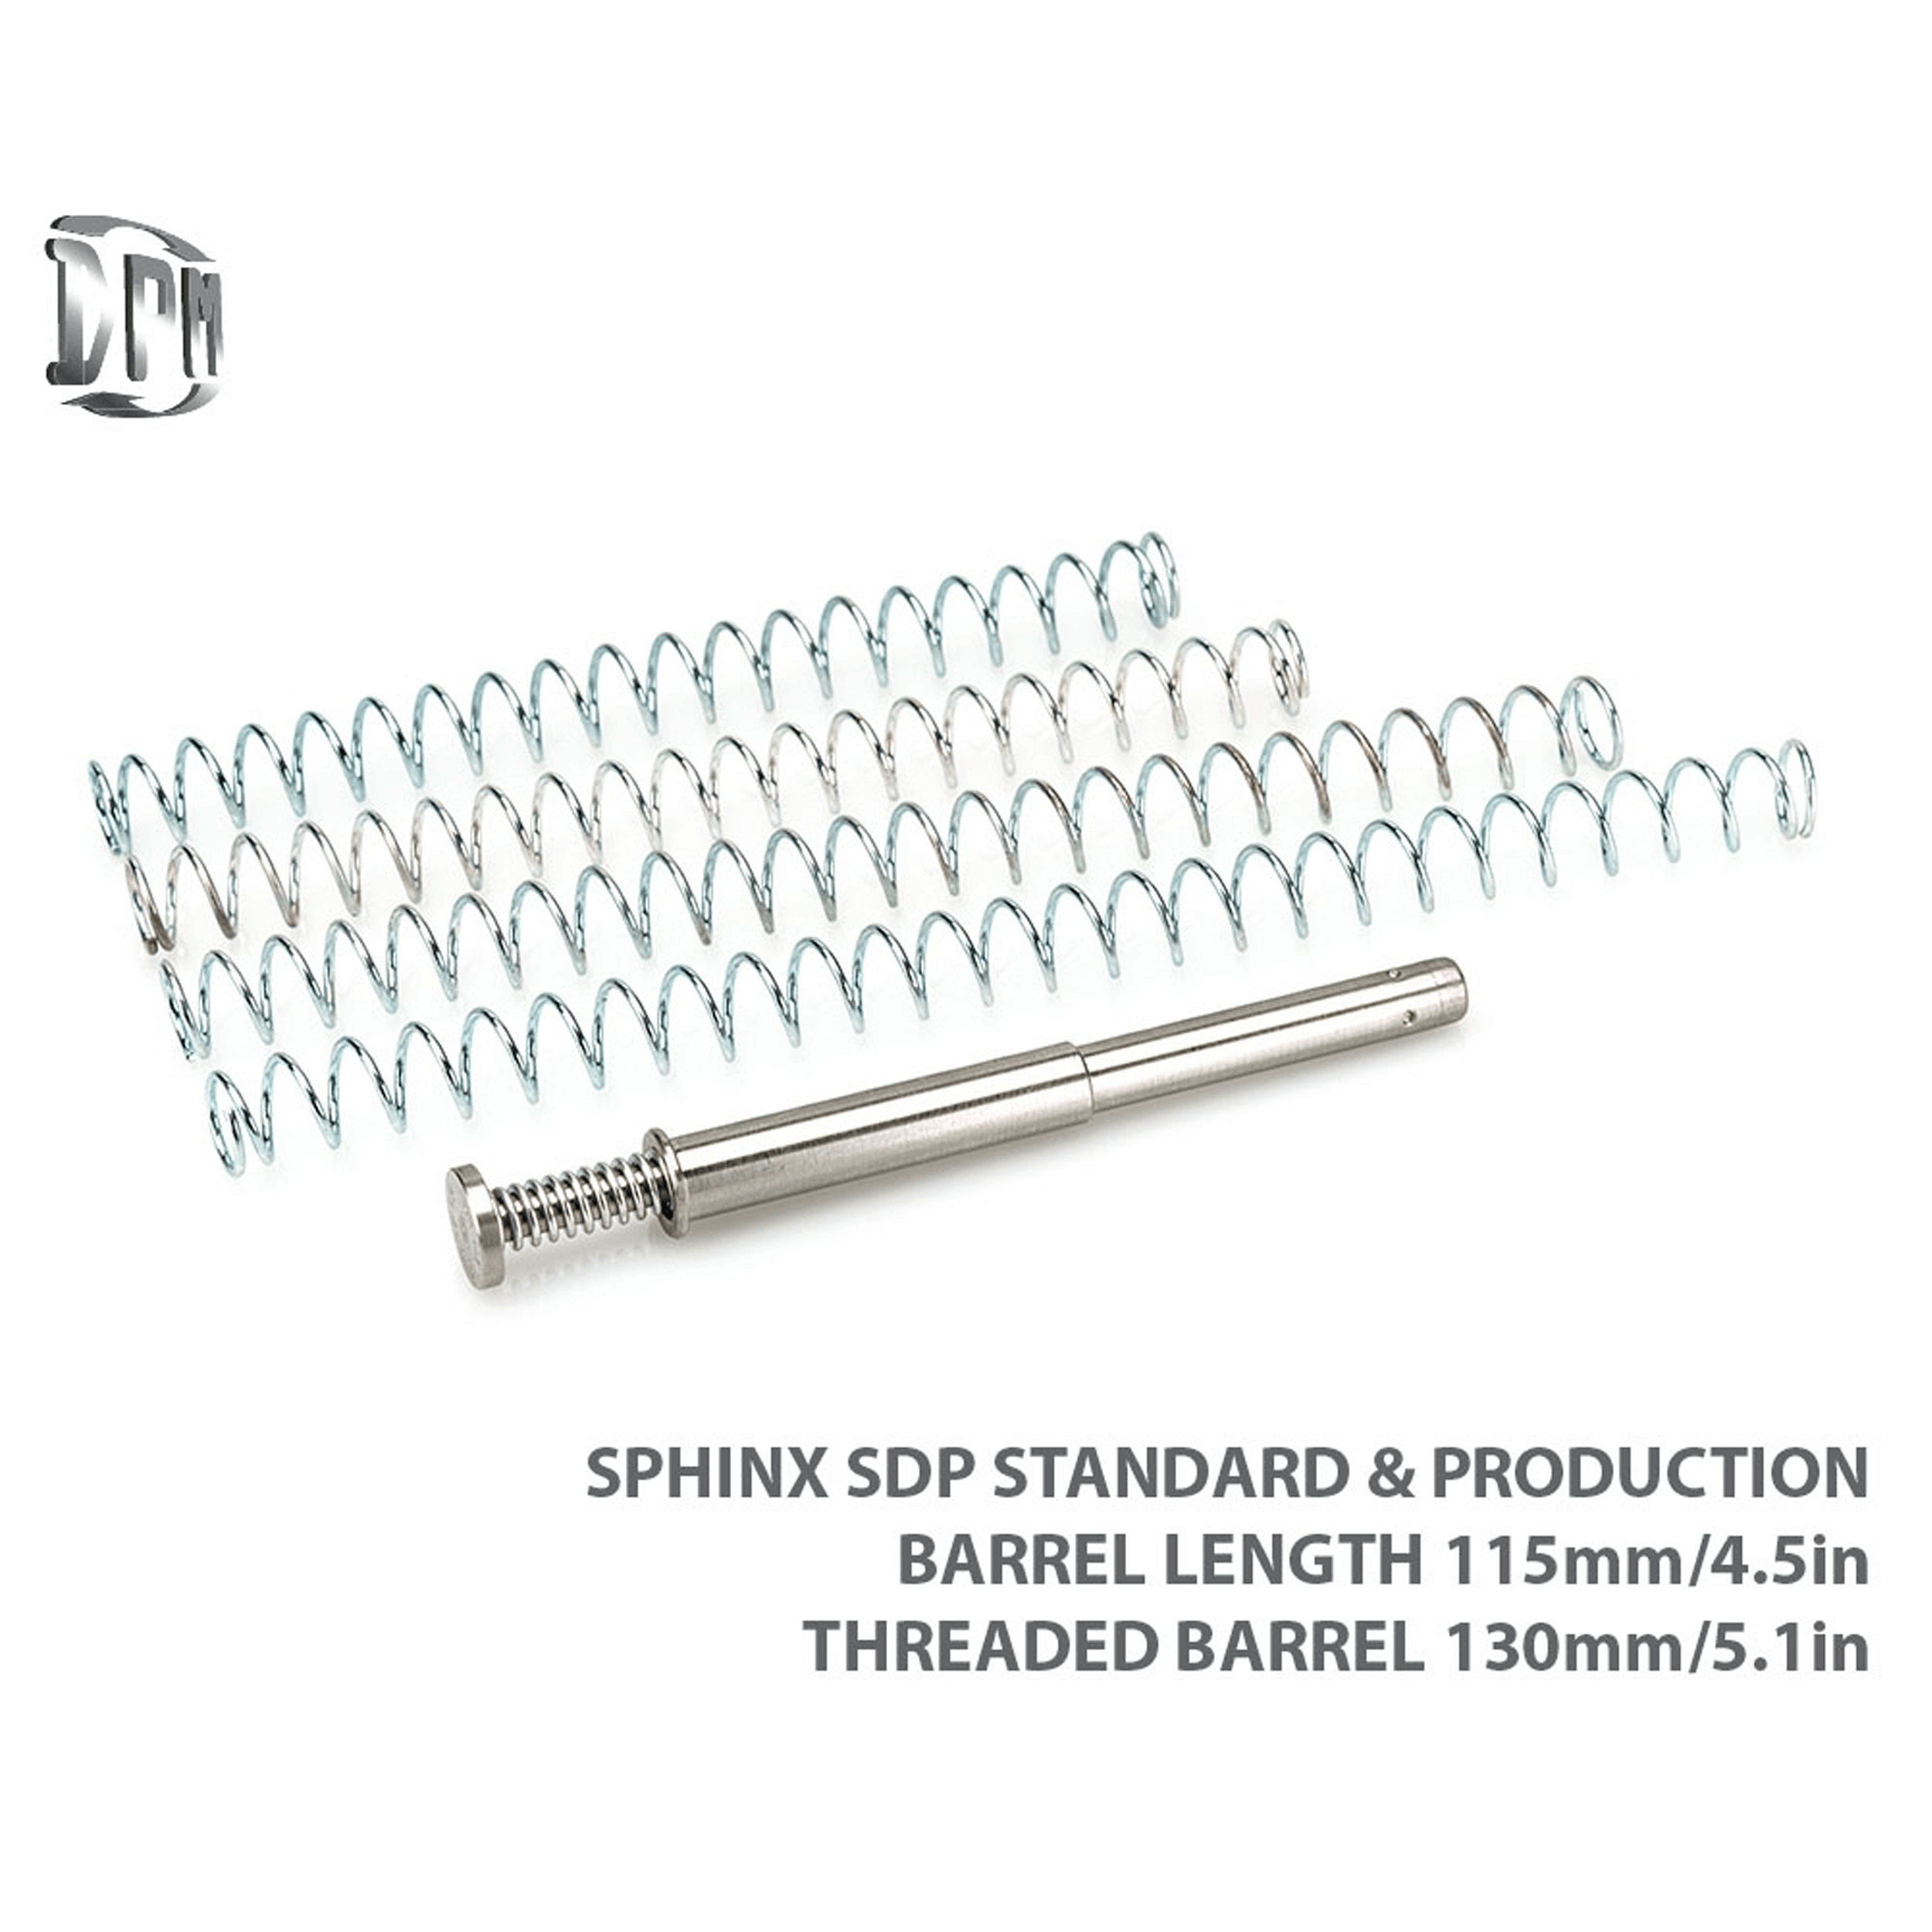 SPHINX SDP Standard & Production Barrel